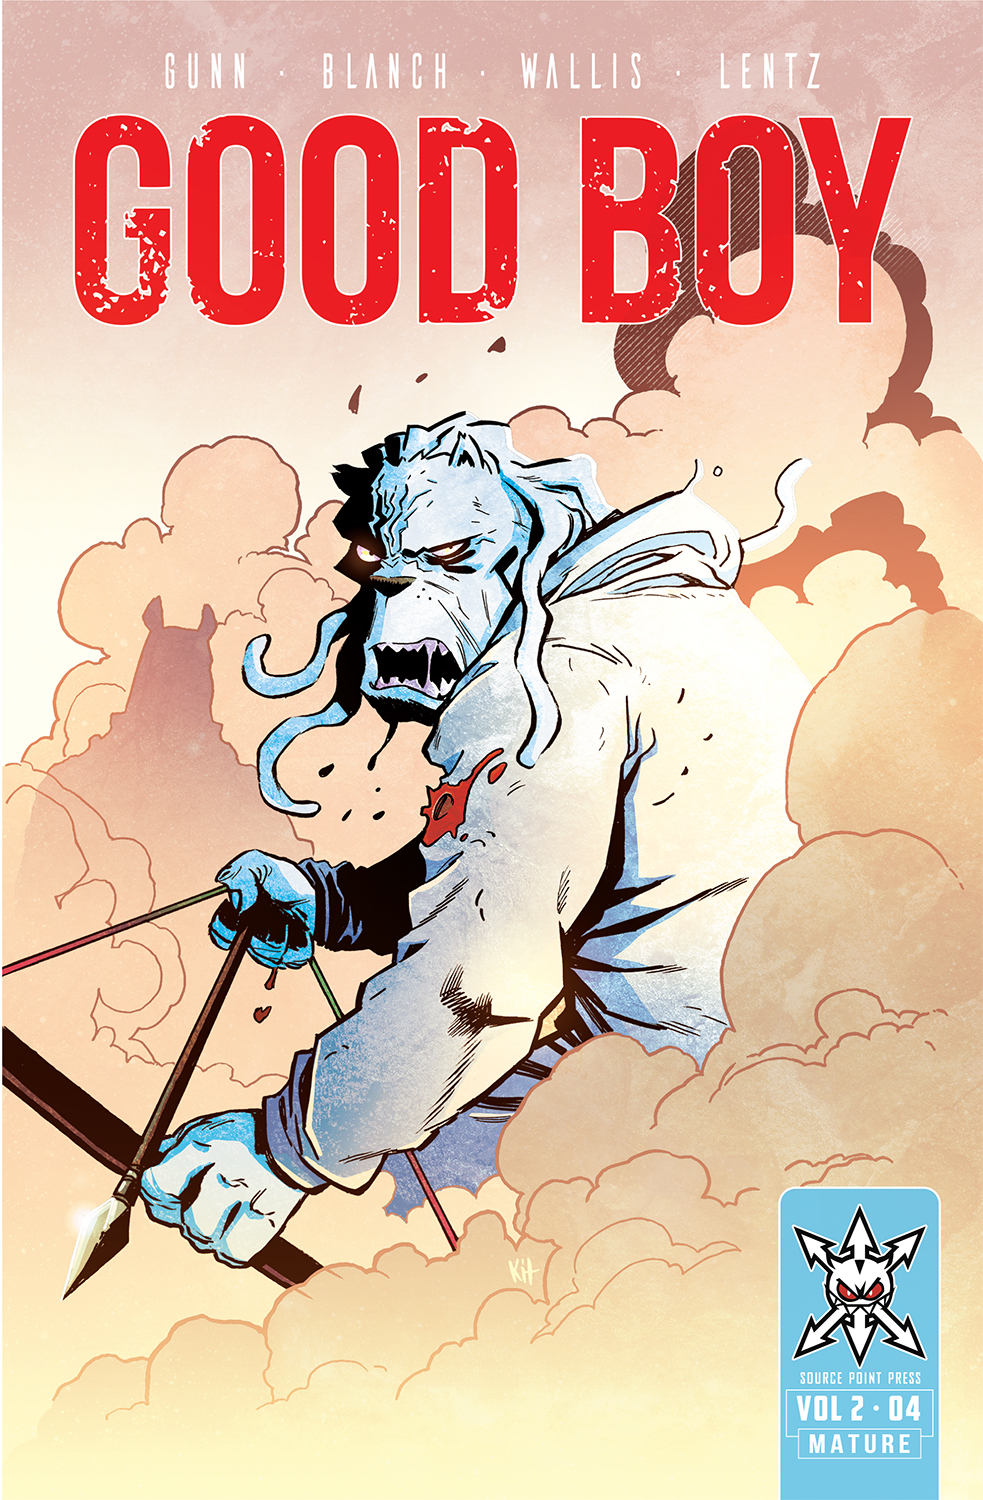 Good Boy Volume 2 #4 Cover A Wallis (Mature) (Of 4)